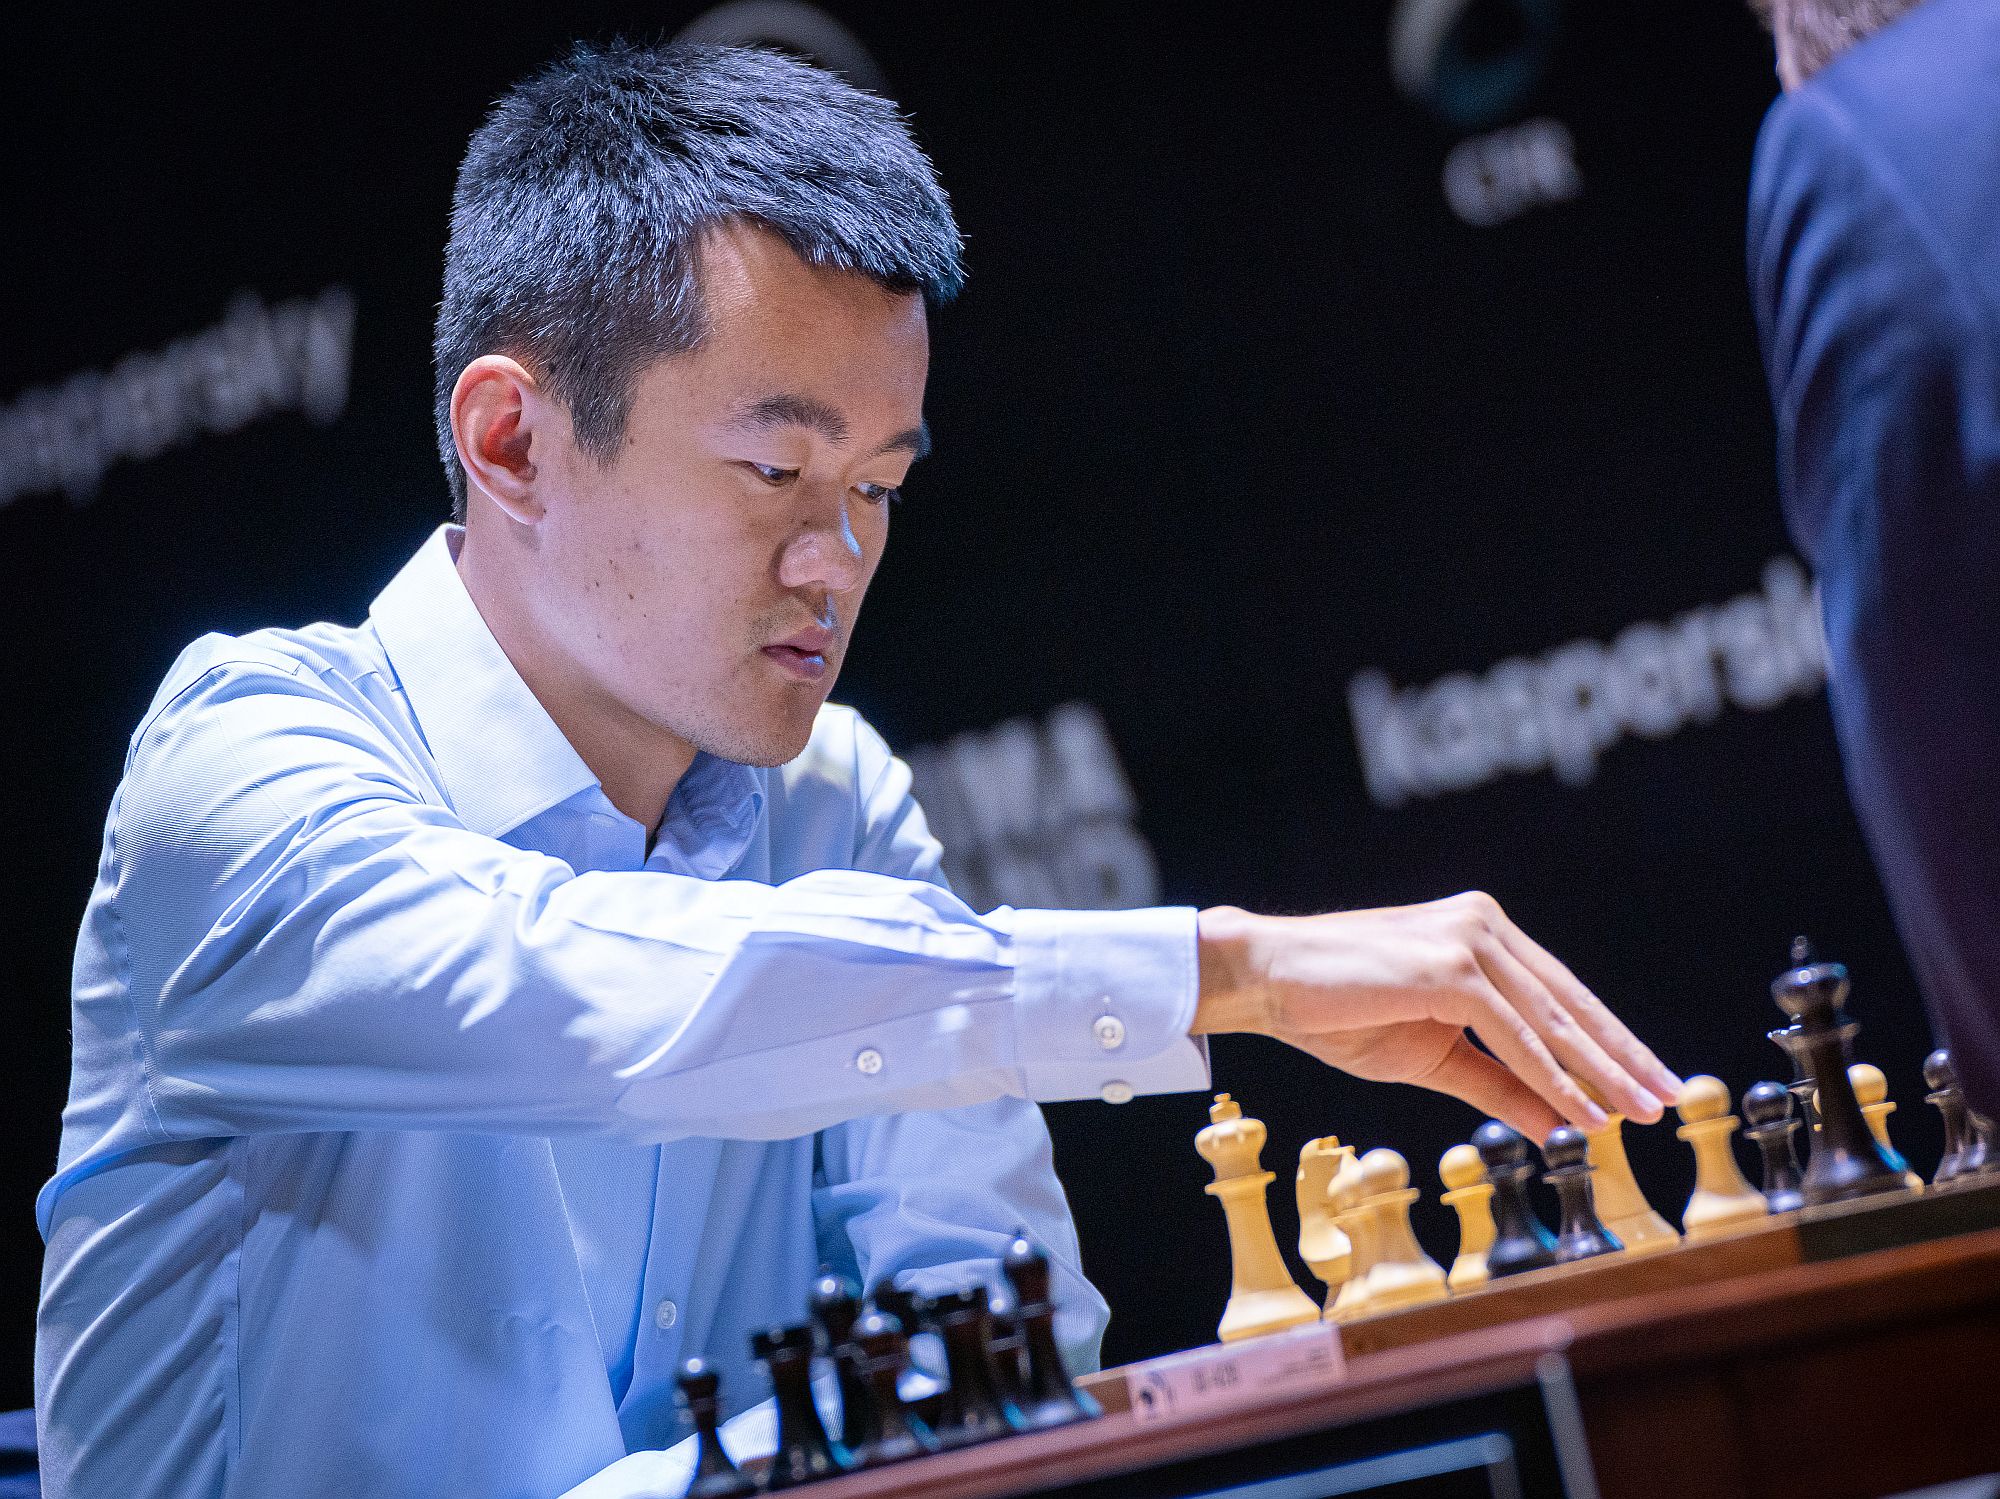 Ding Liren, Biography, Chess Championship, & Facts